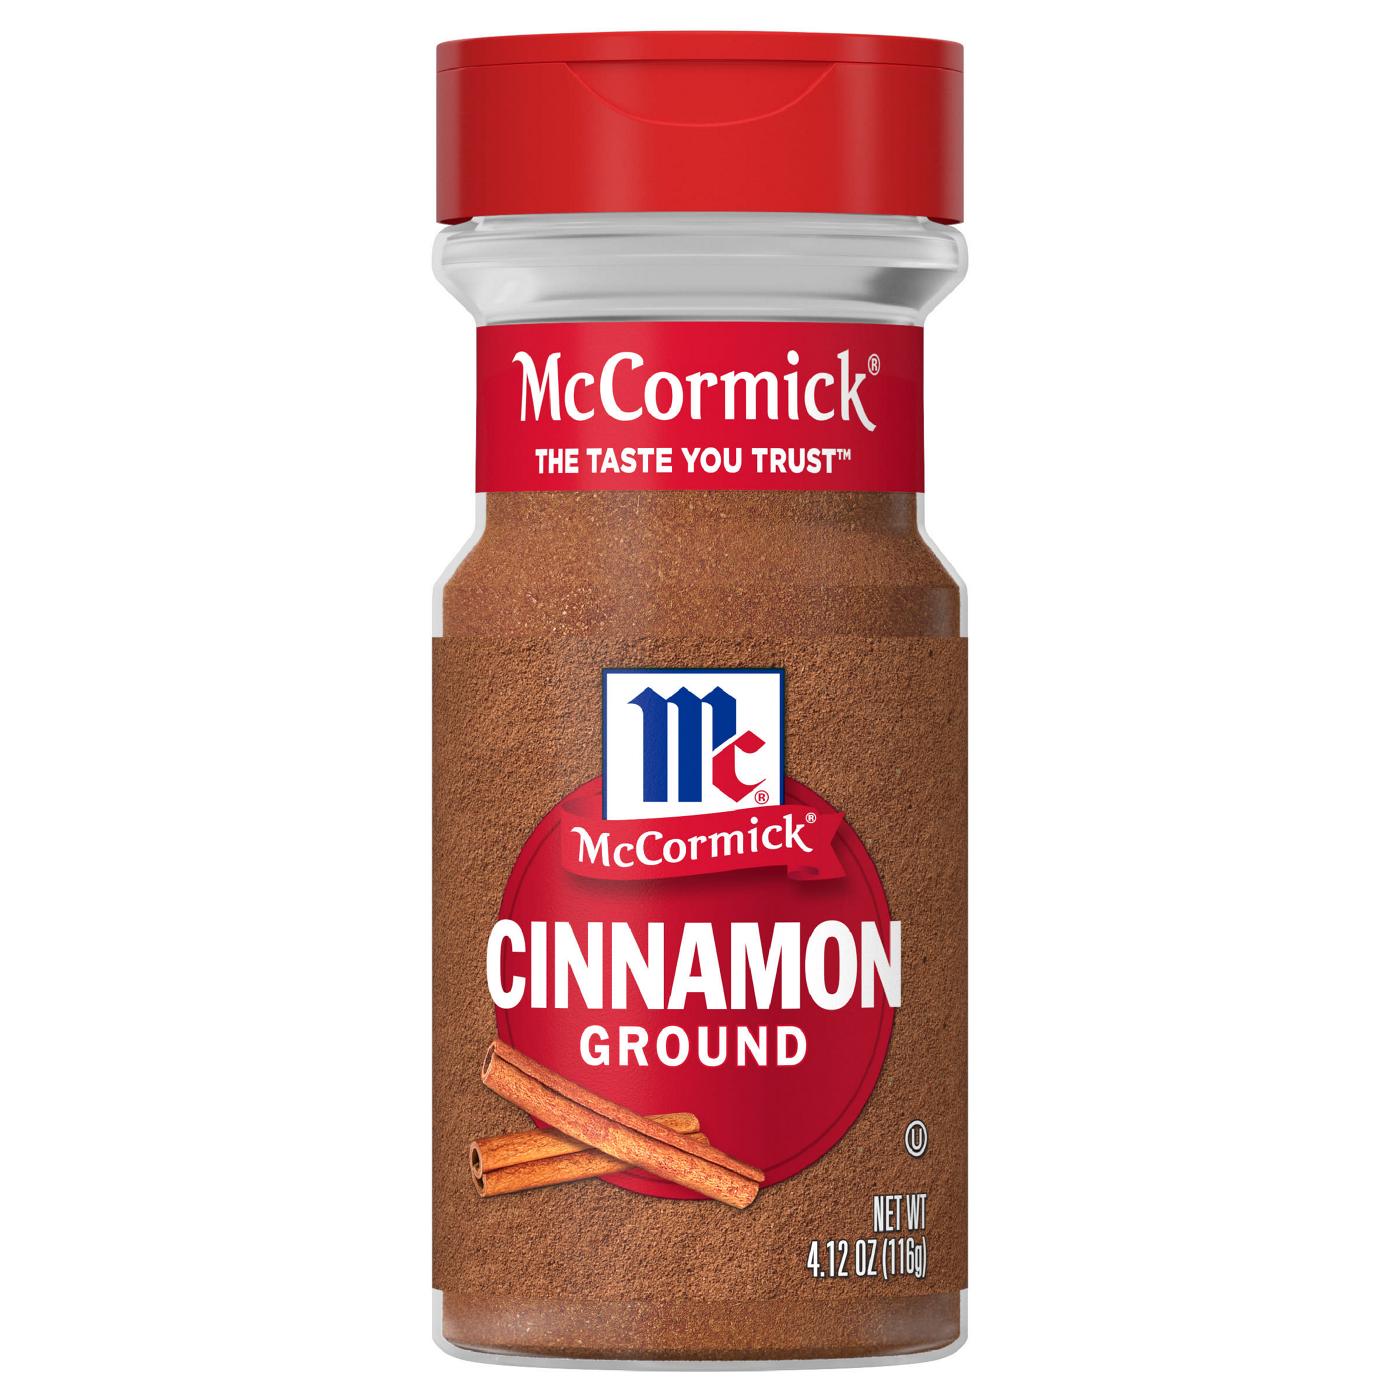 McCormick Ground Cinnamon; image 1 of 8